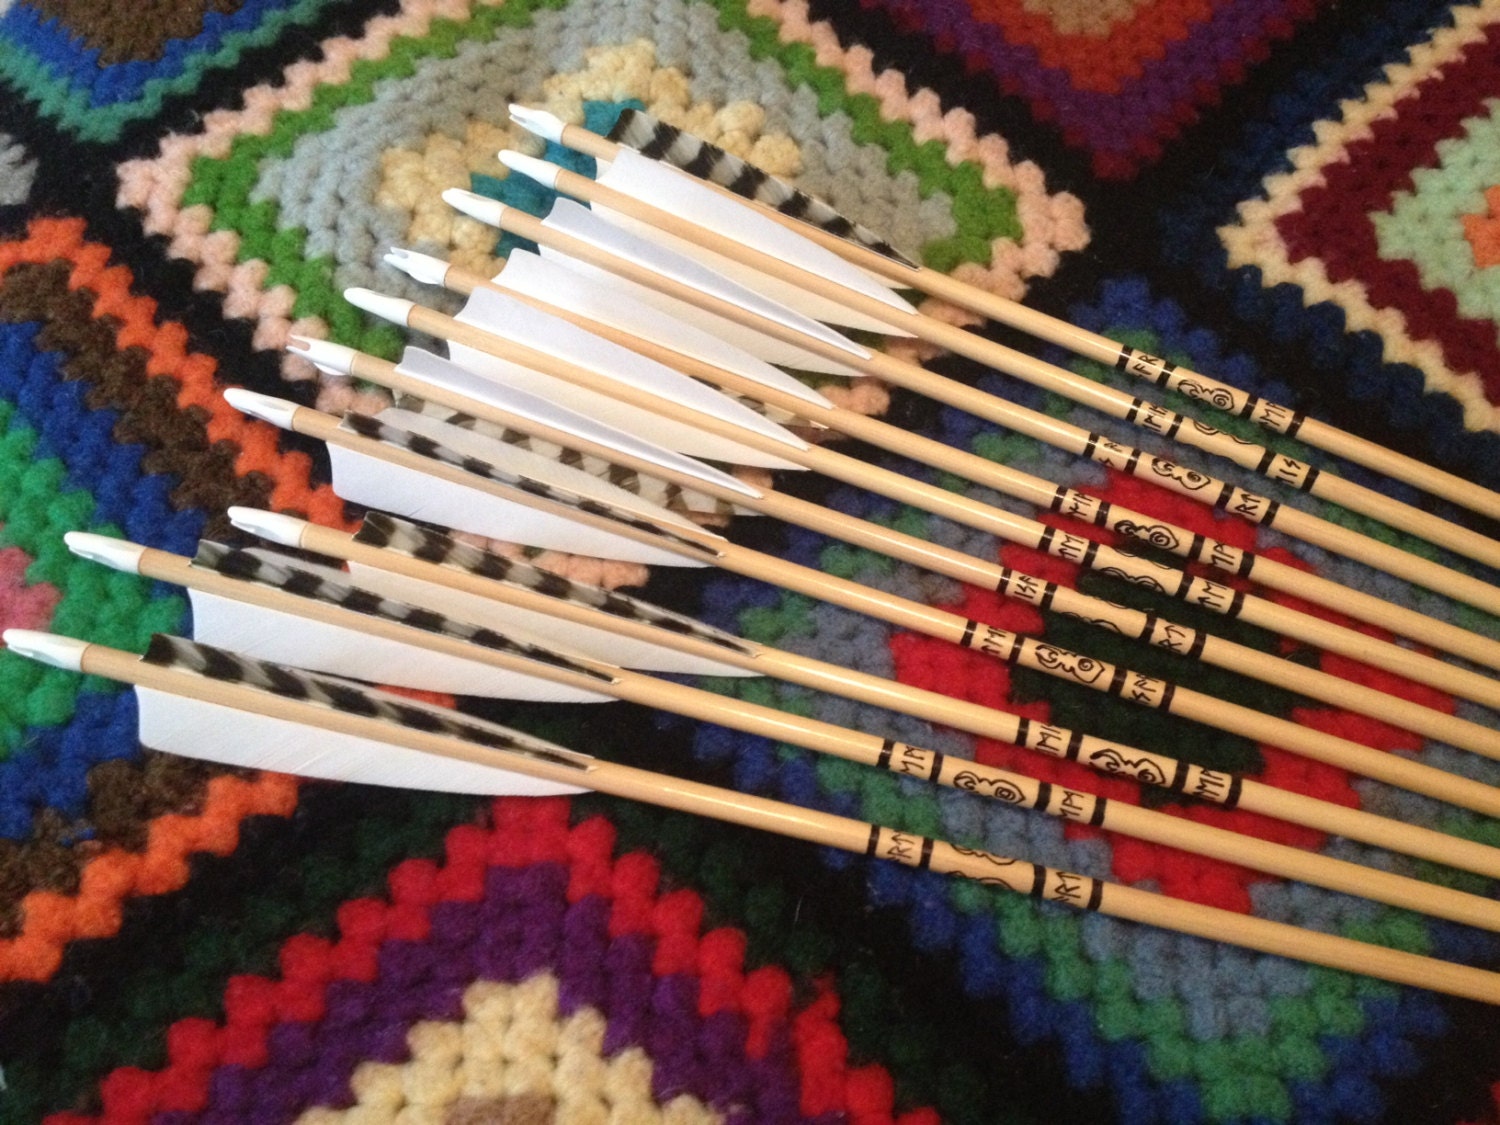 Custom Traditional Wood Arrows By Earthwisdomarts On Etsy